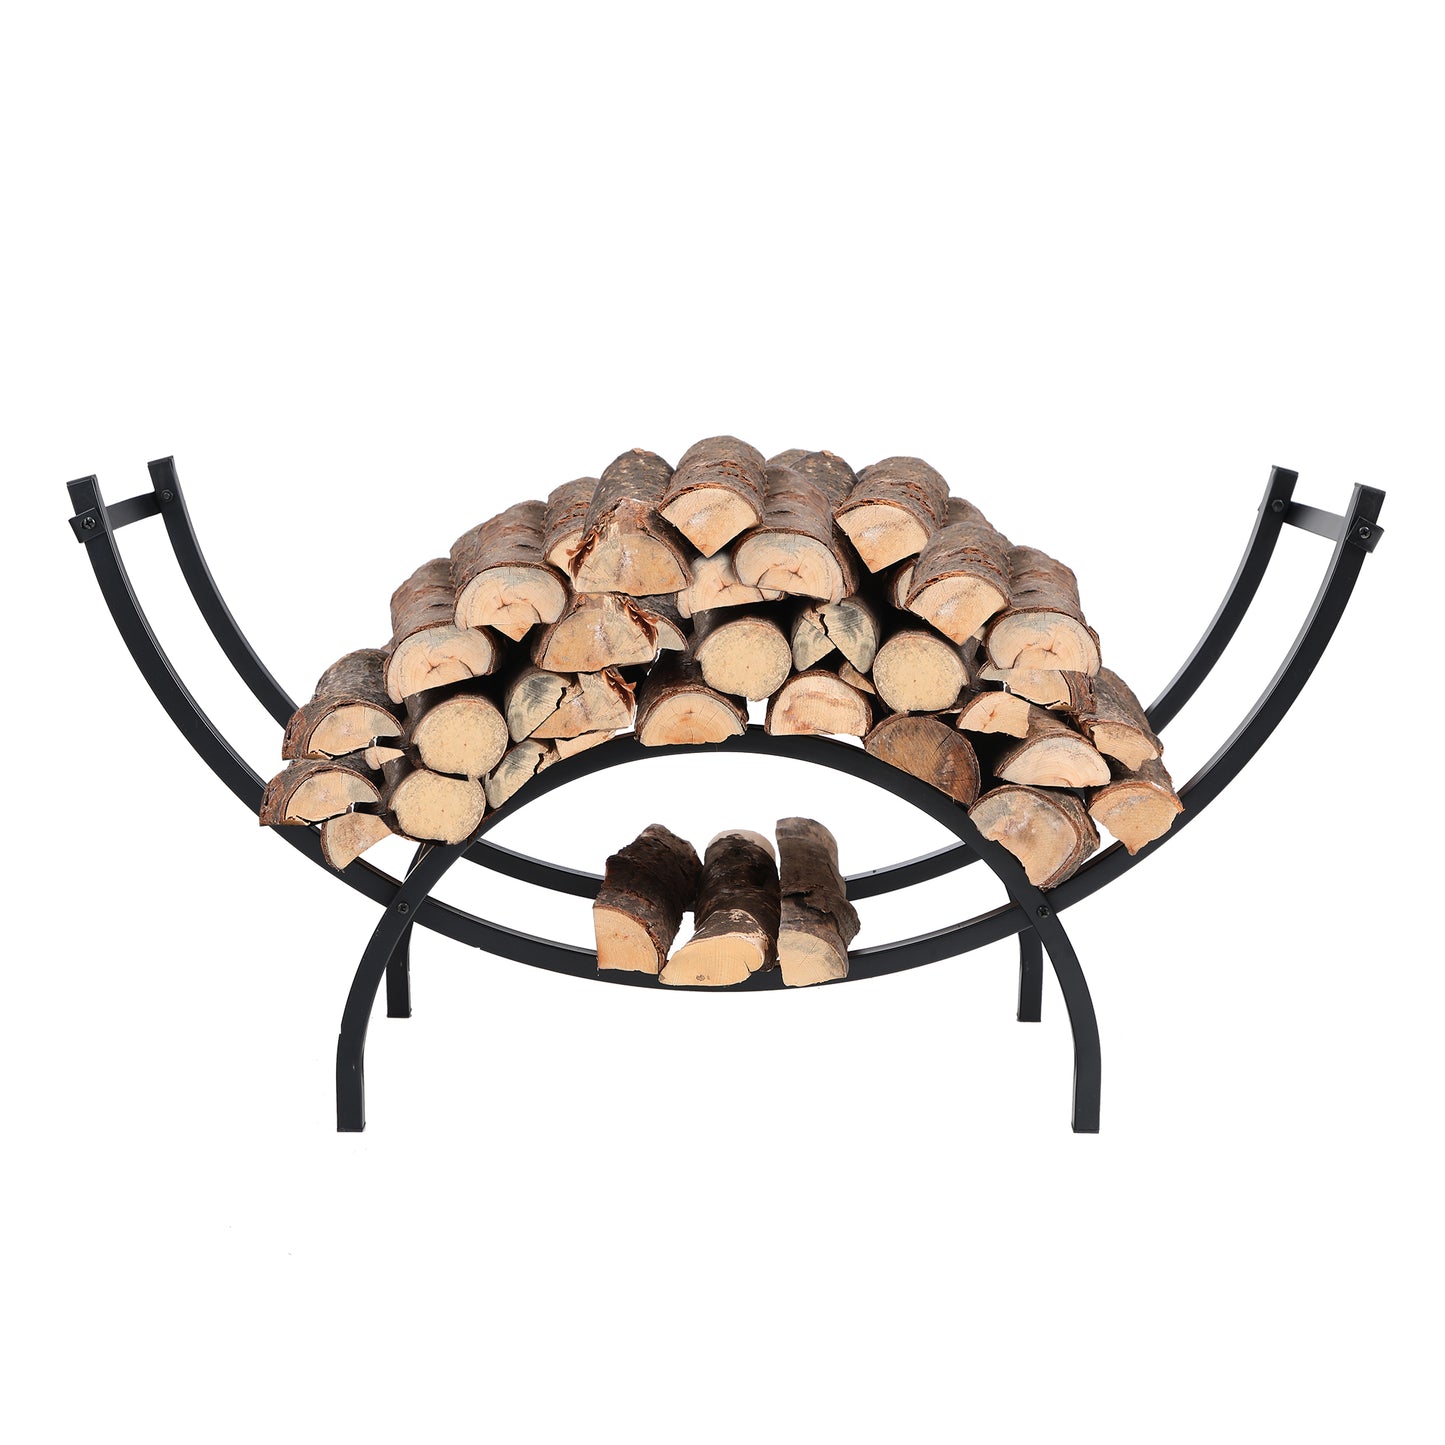 Sophia & William Garden 40" Steel Semi-Circular Firewood Log Rack - Black